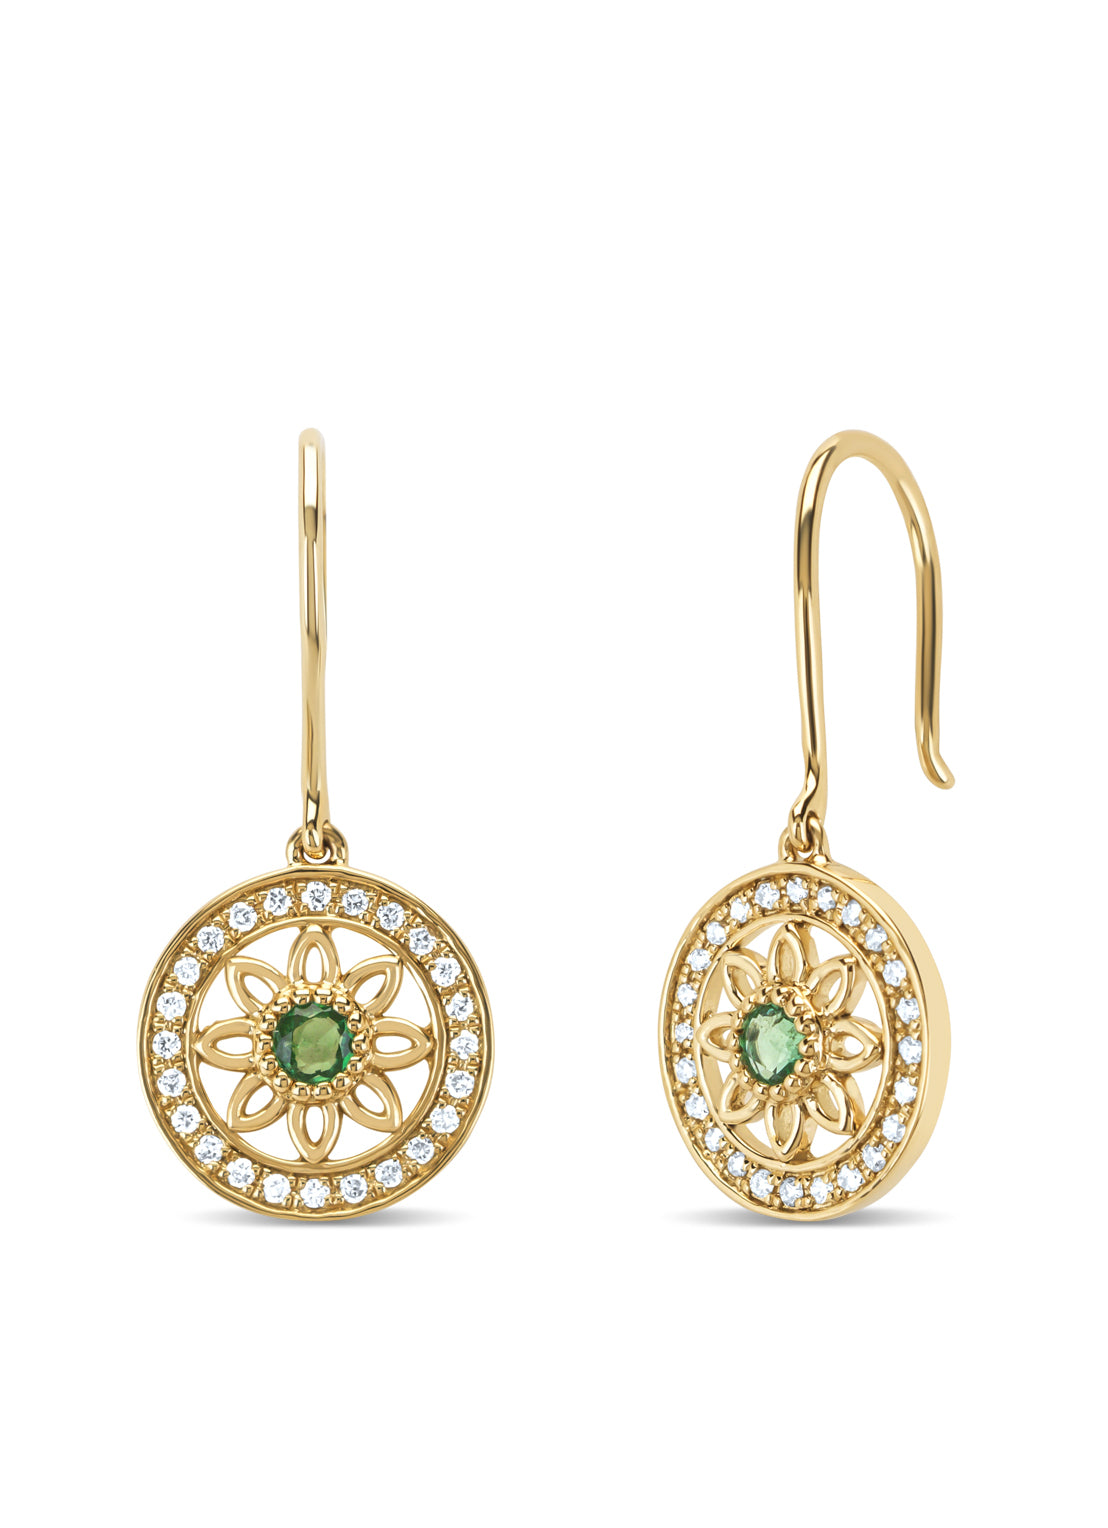 Birthstones Yellow gold earrings Smaragd (May)